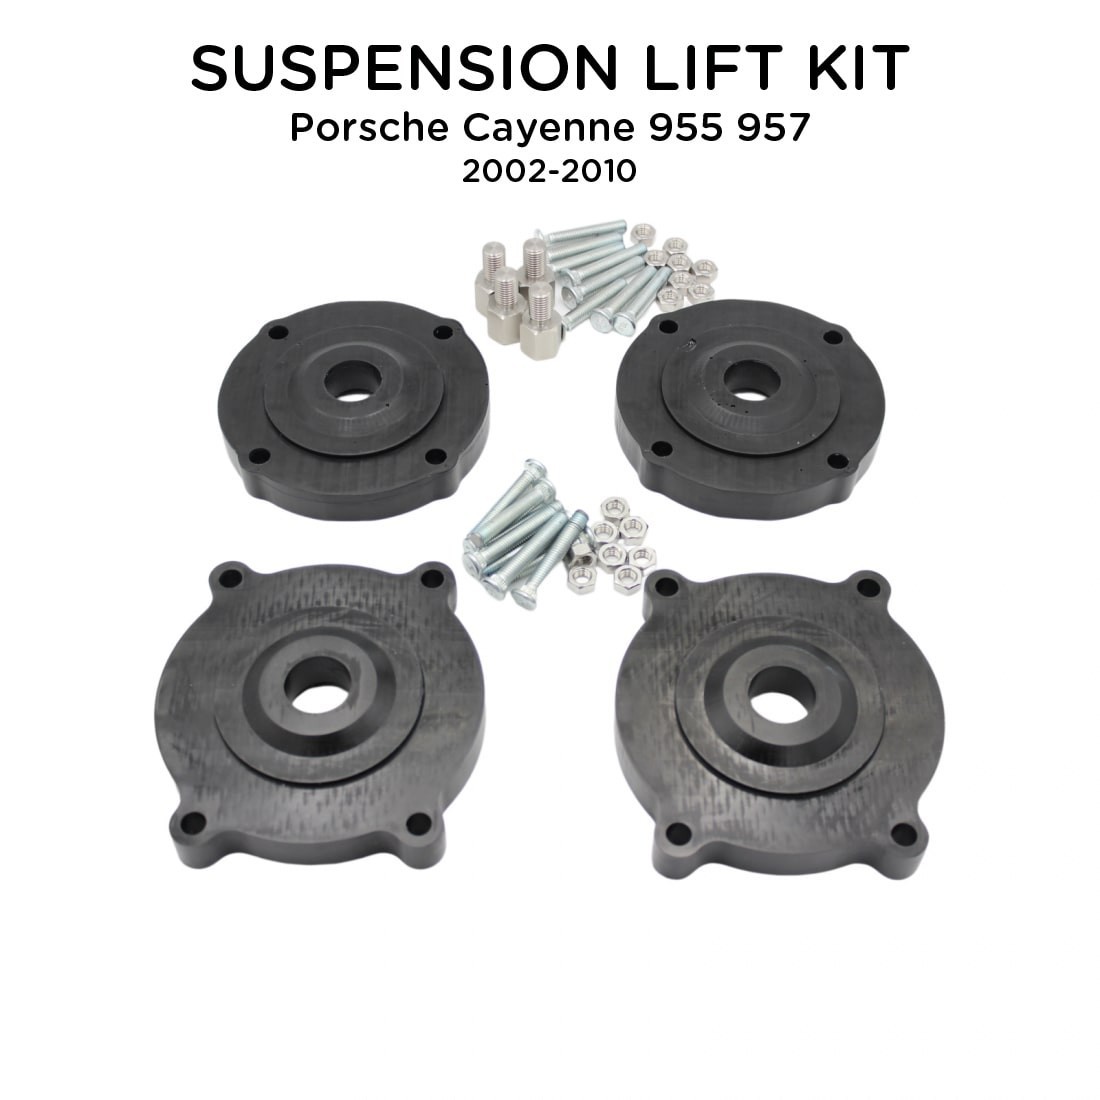 Suspension Lift Kit For Porsche Cayenne 955 957 2002-2010